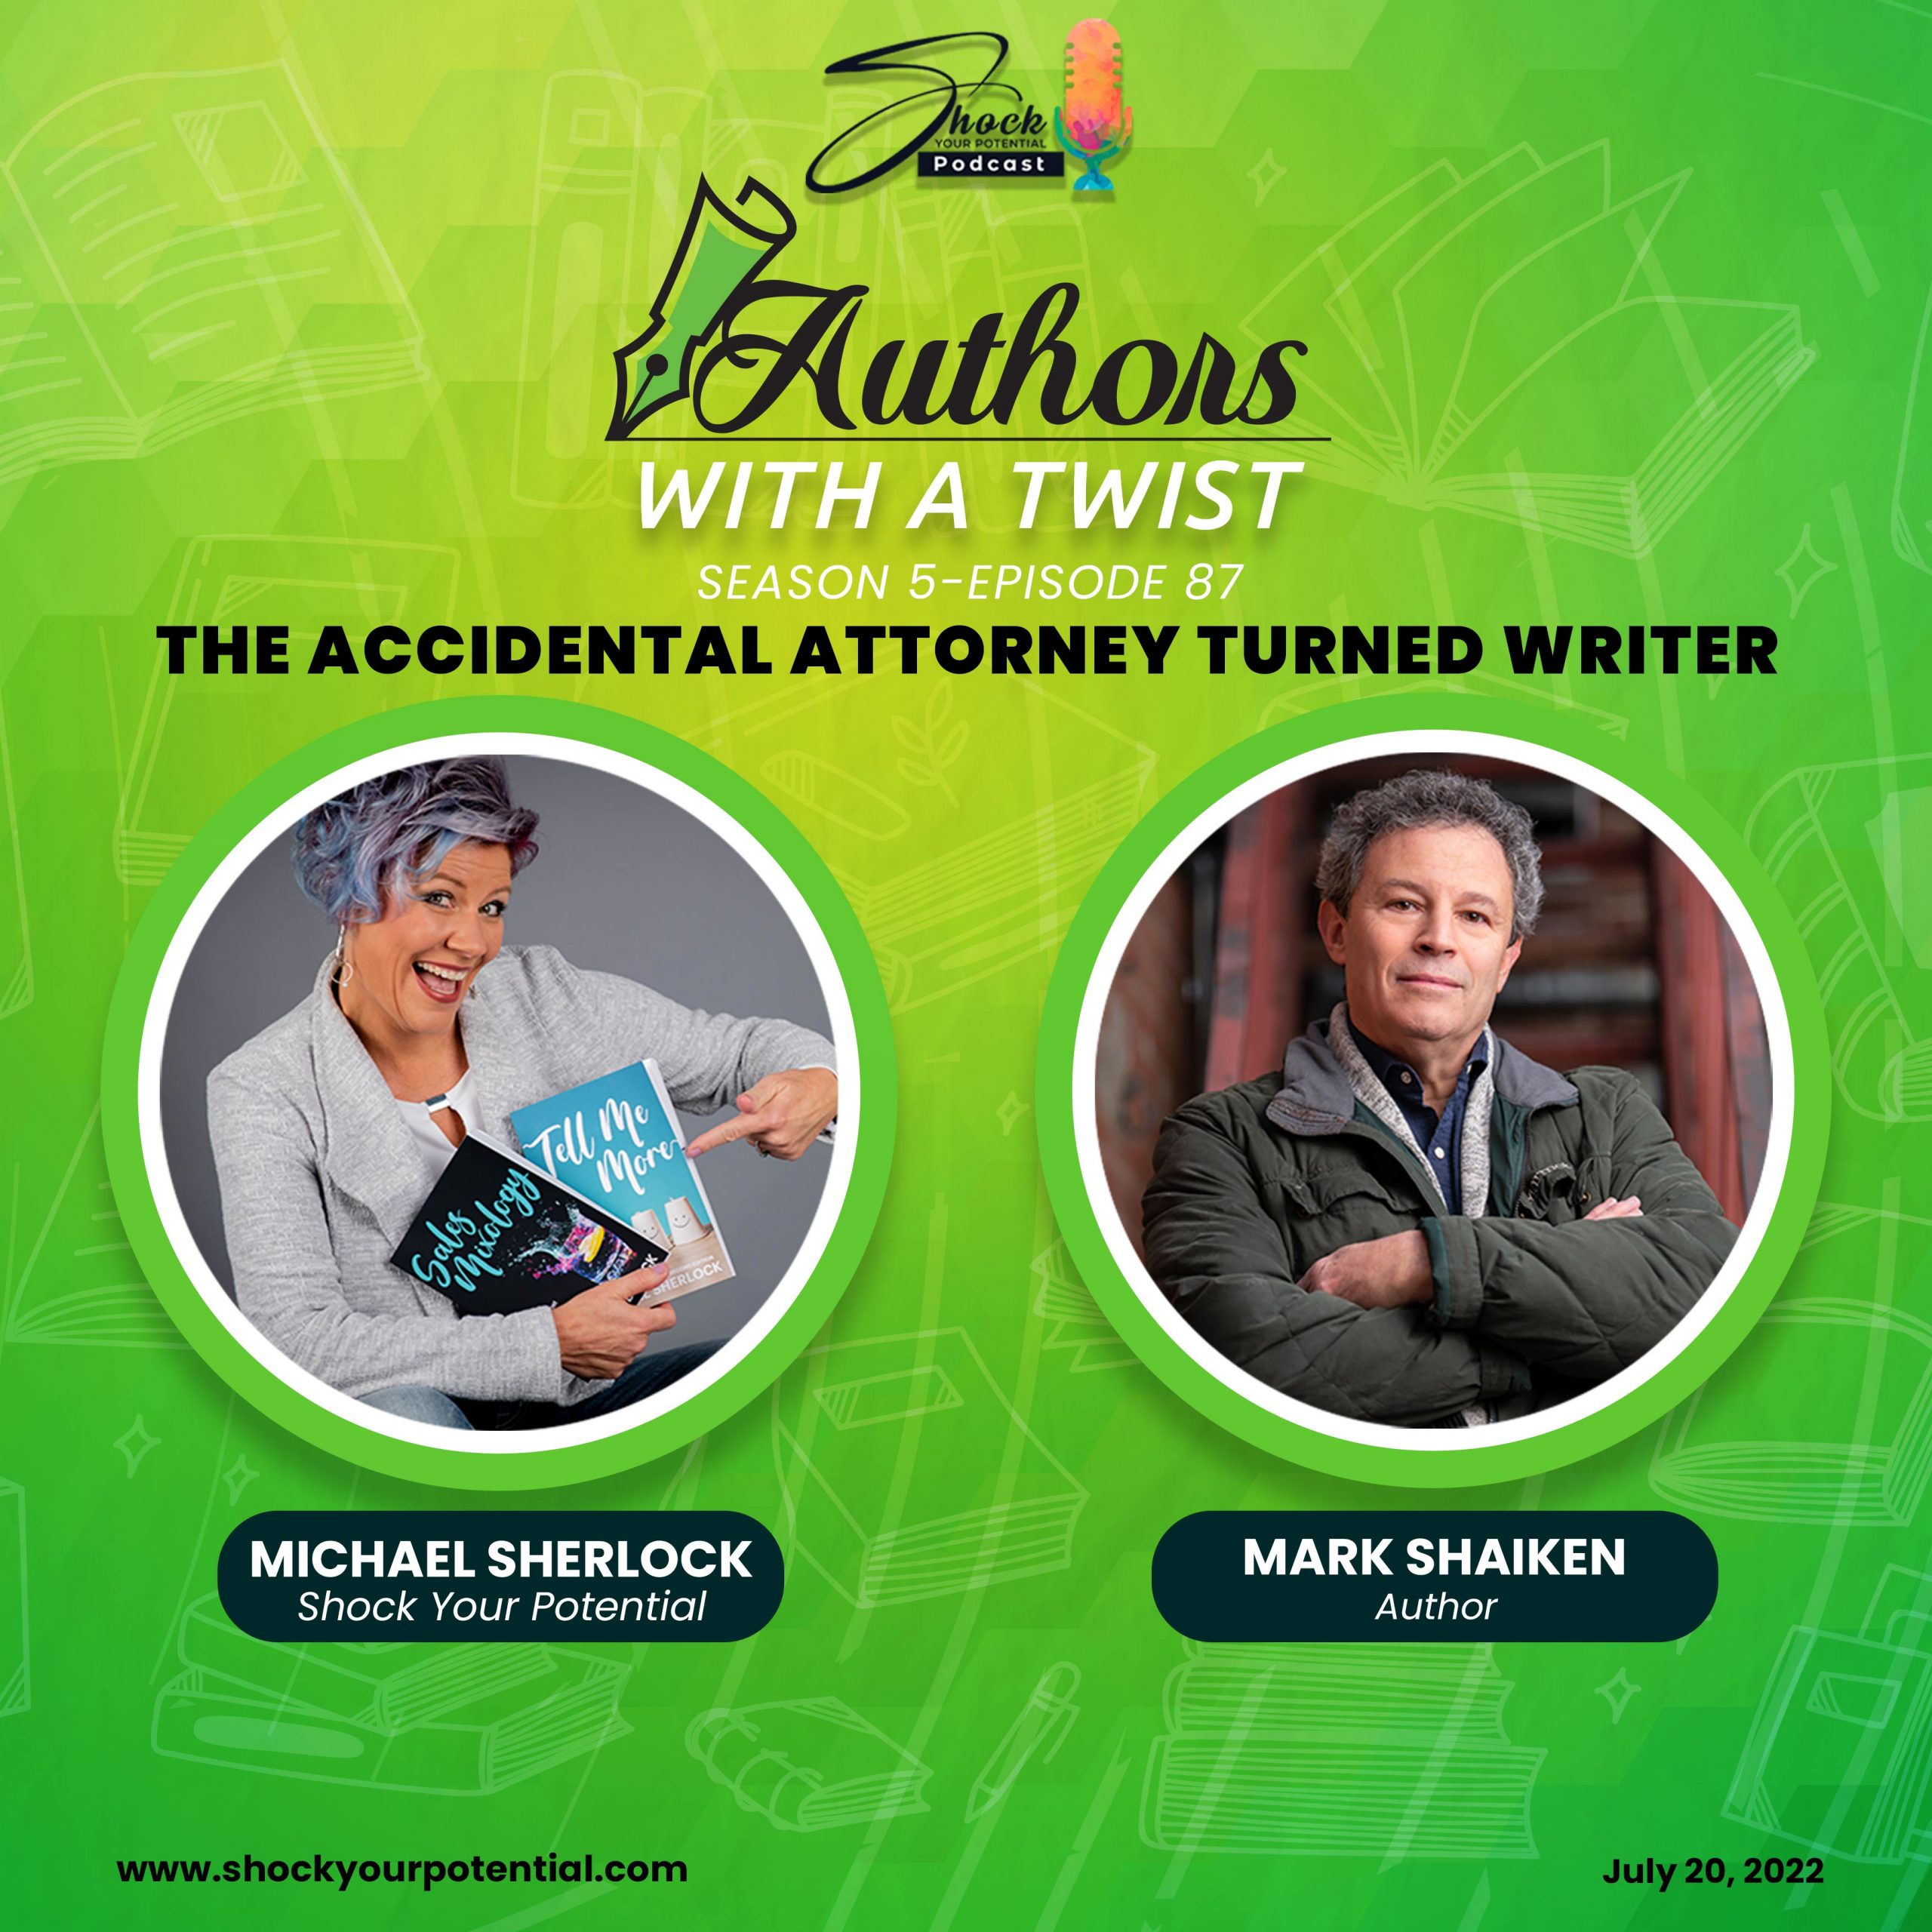 The Accidental Attorney Turned Writer – Mark Shaiken